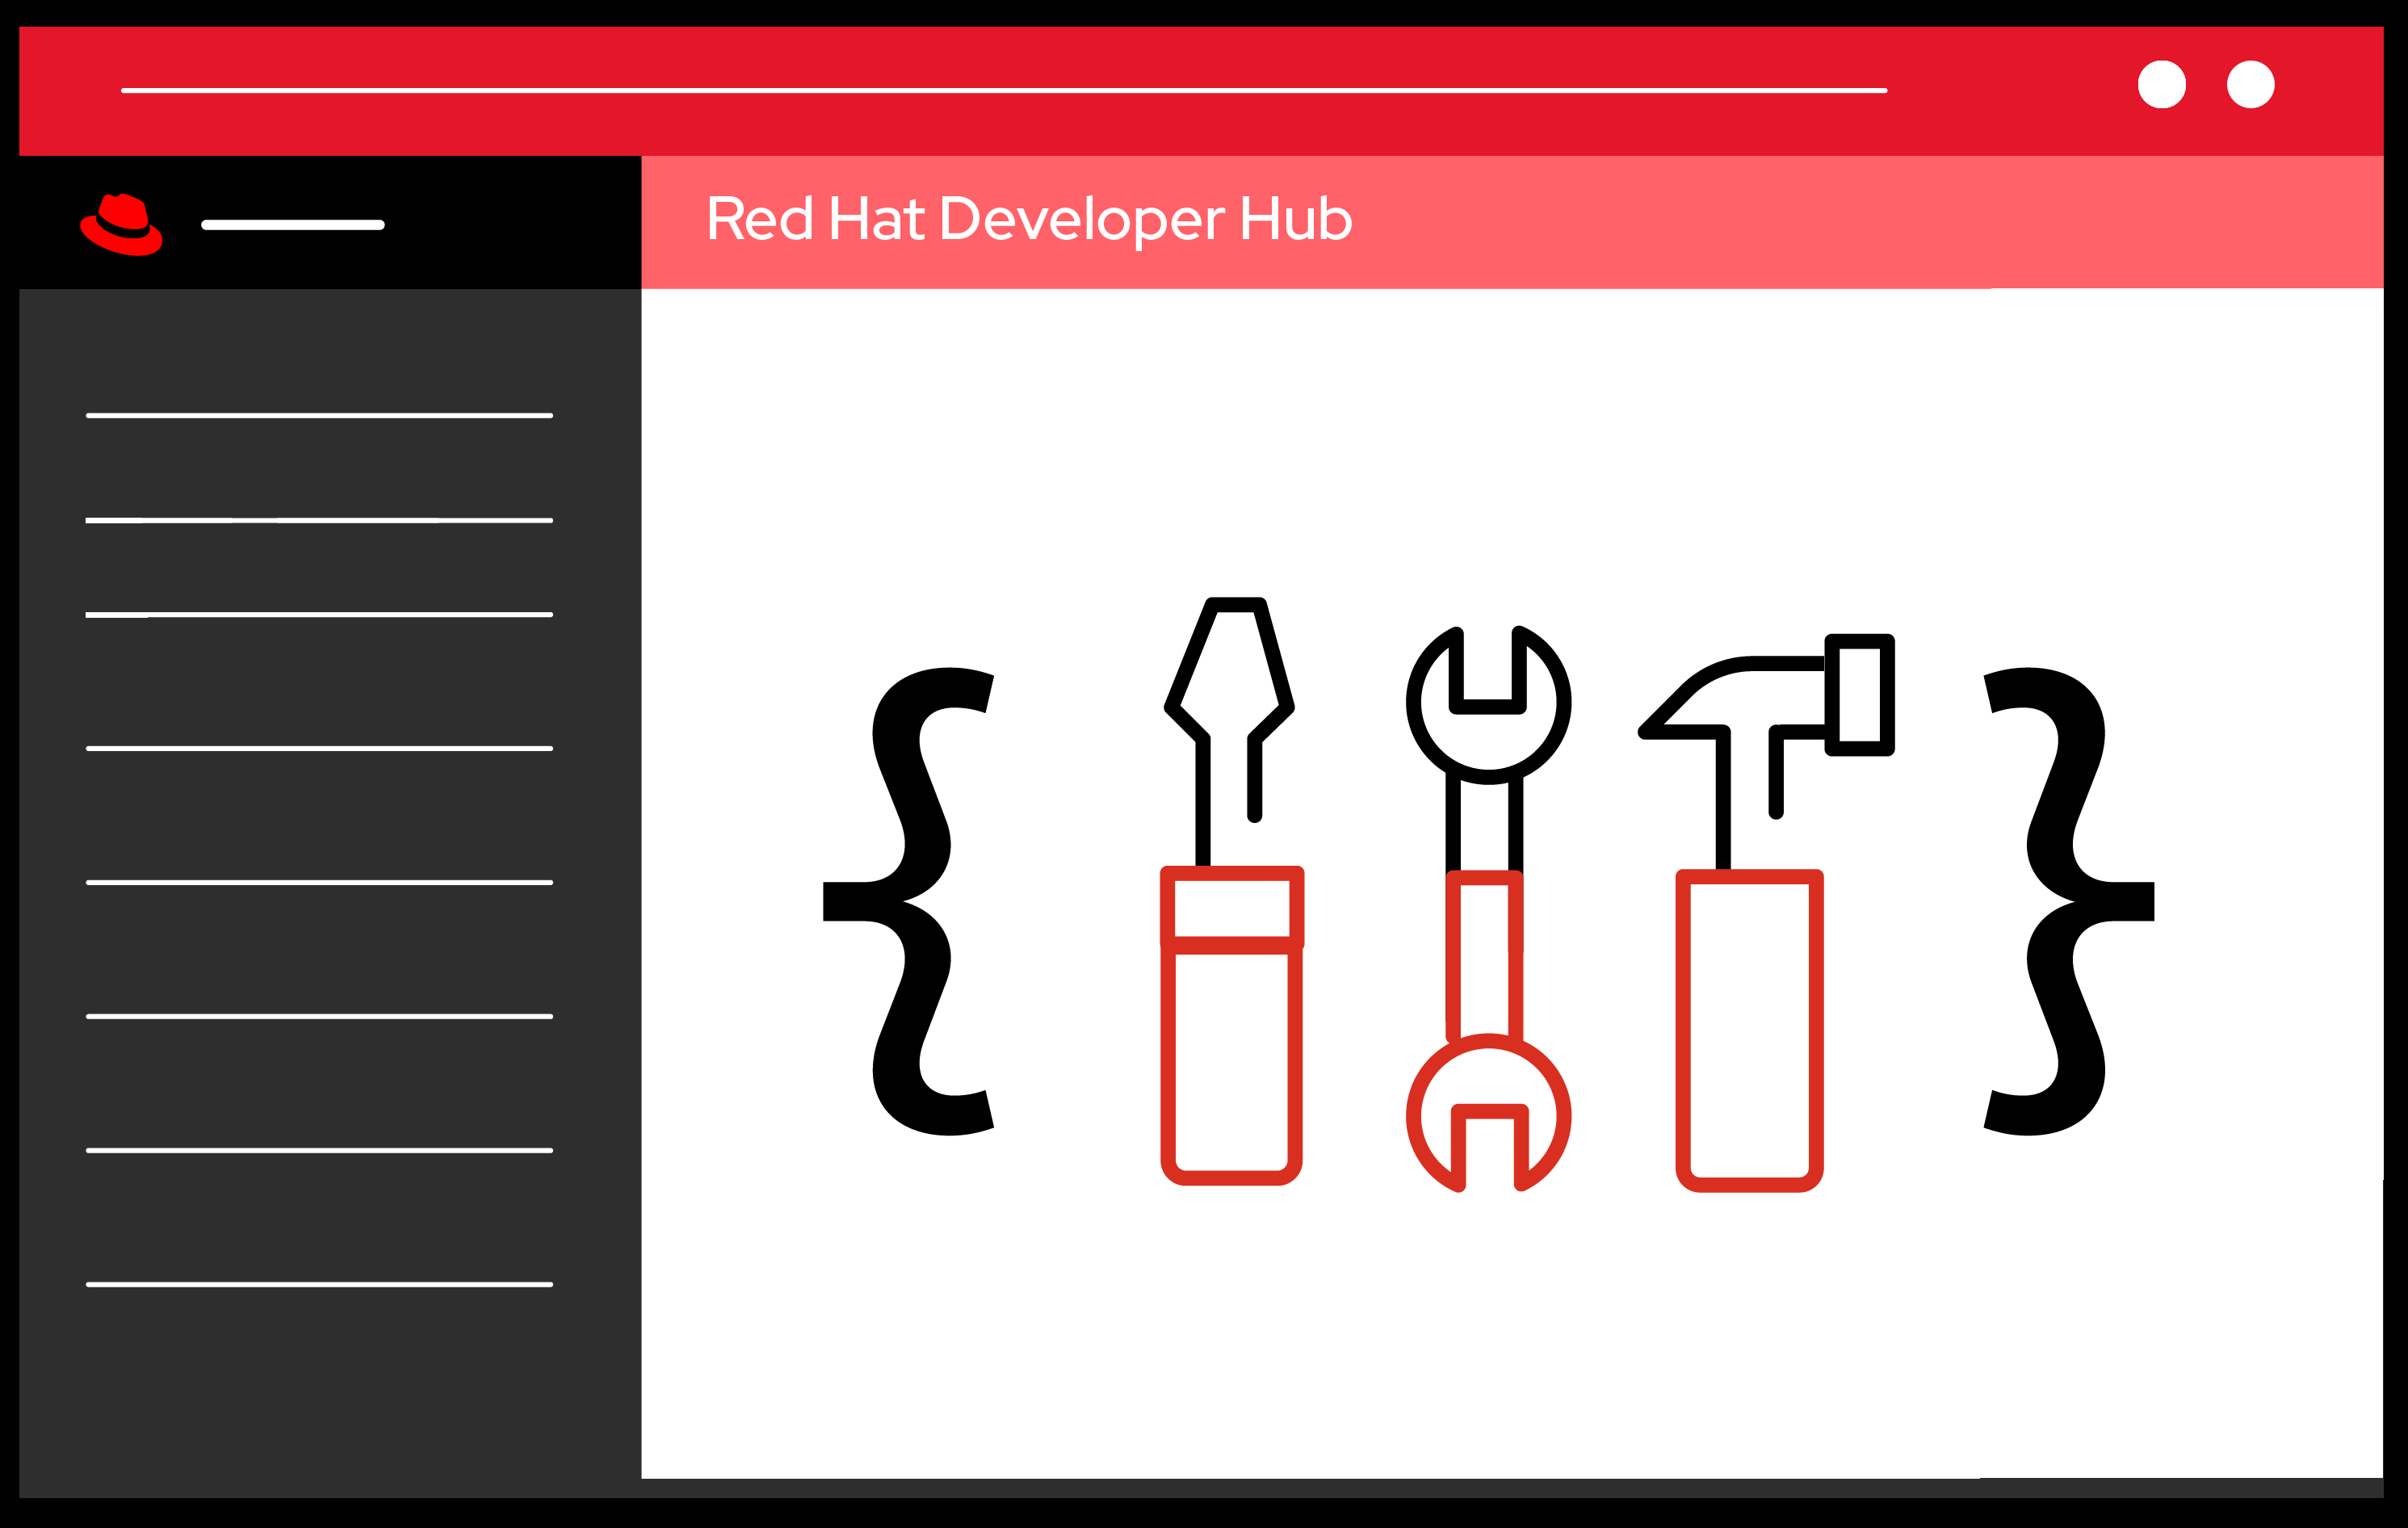 Developers hub image